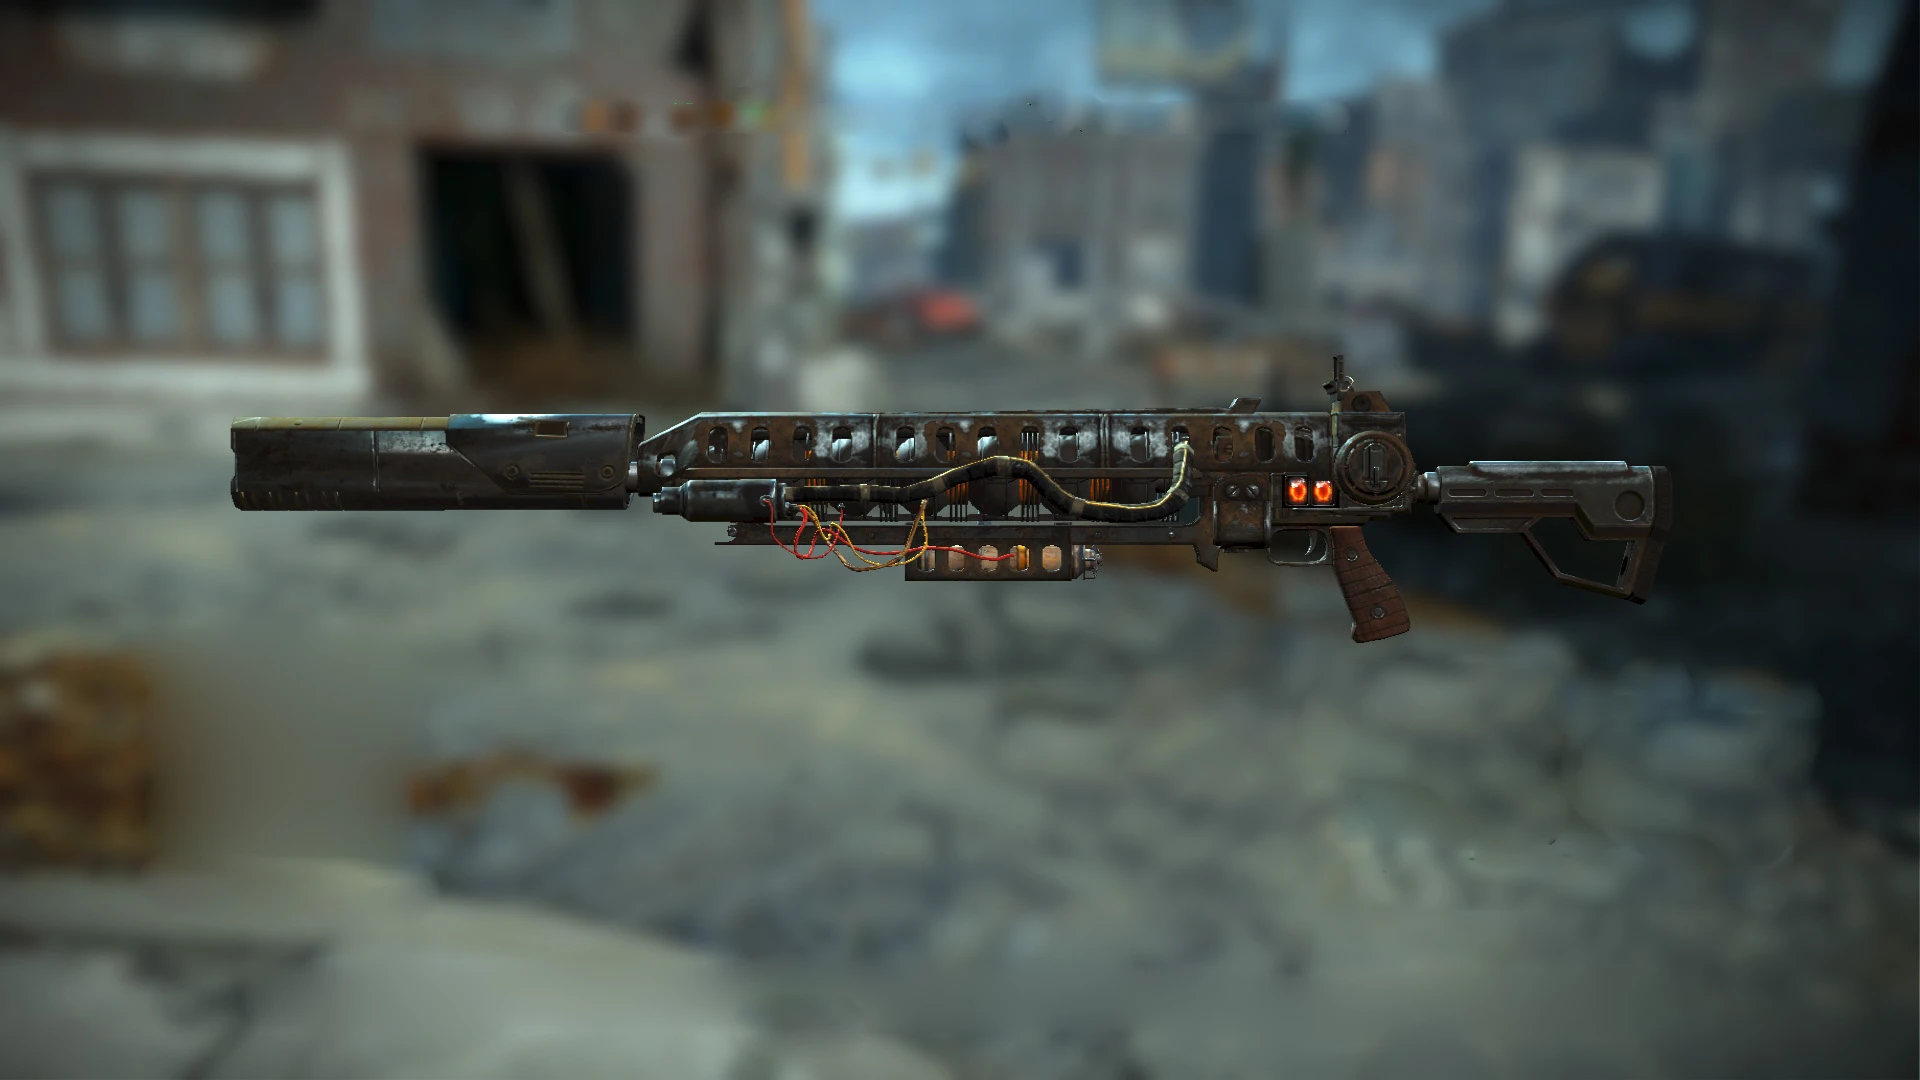 fallout 3 gauss rifle code